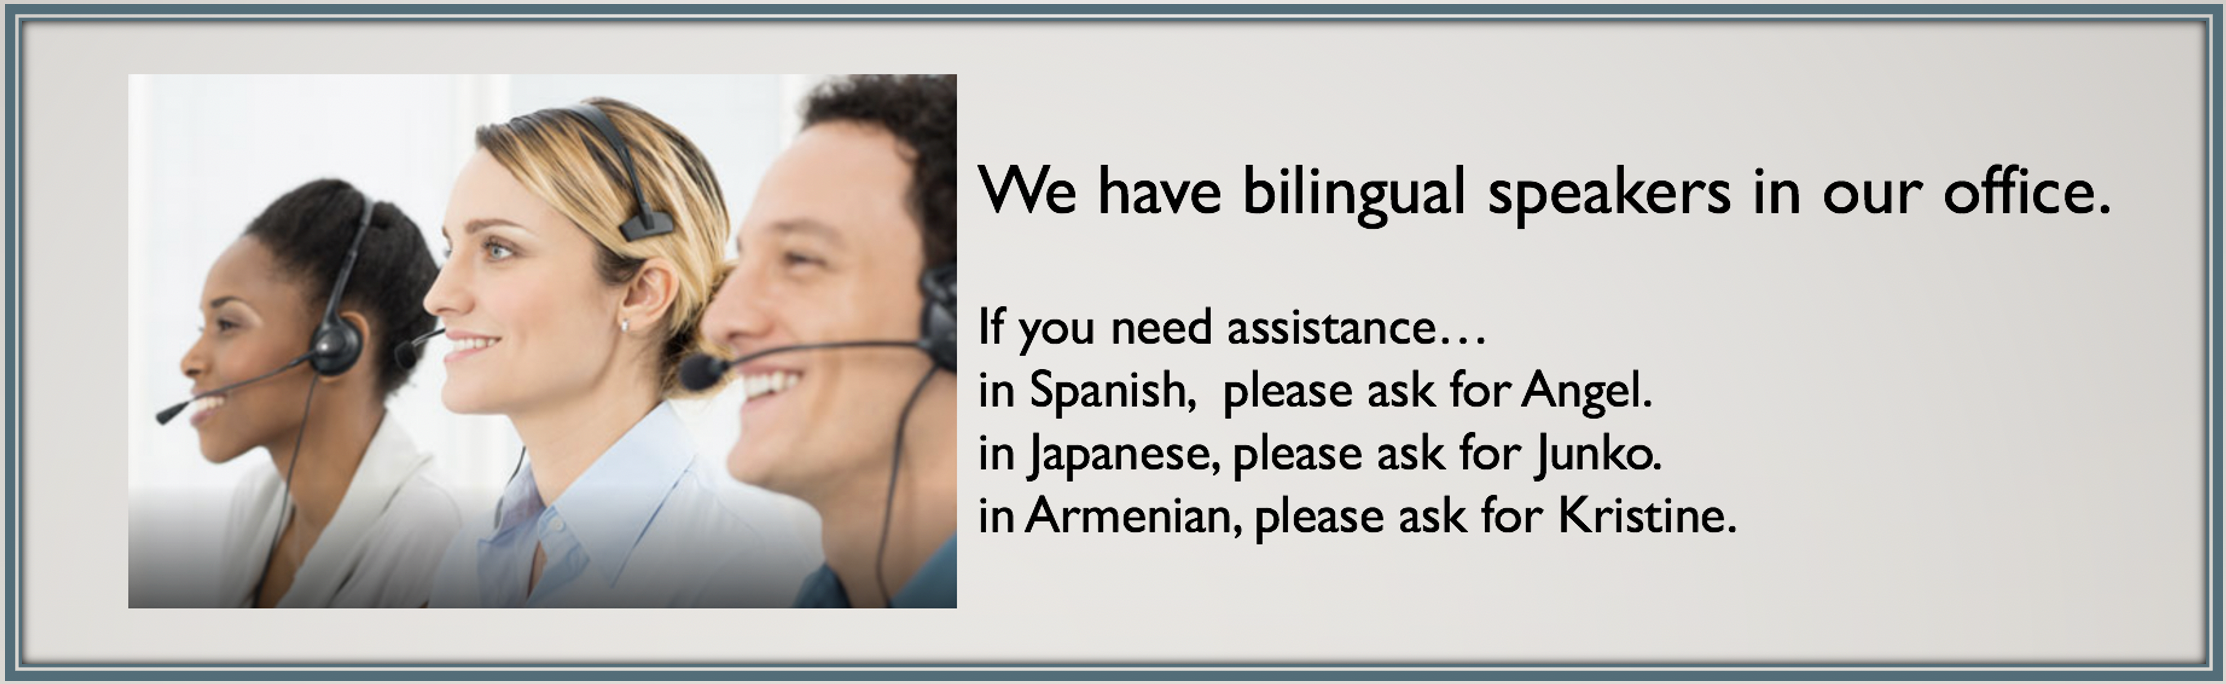 multilingual customer service